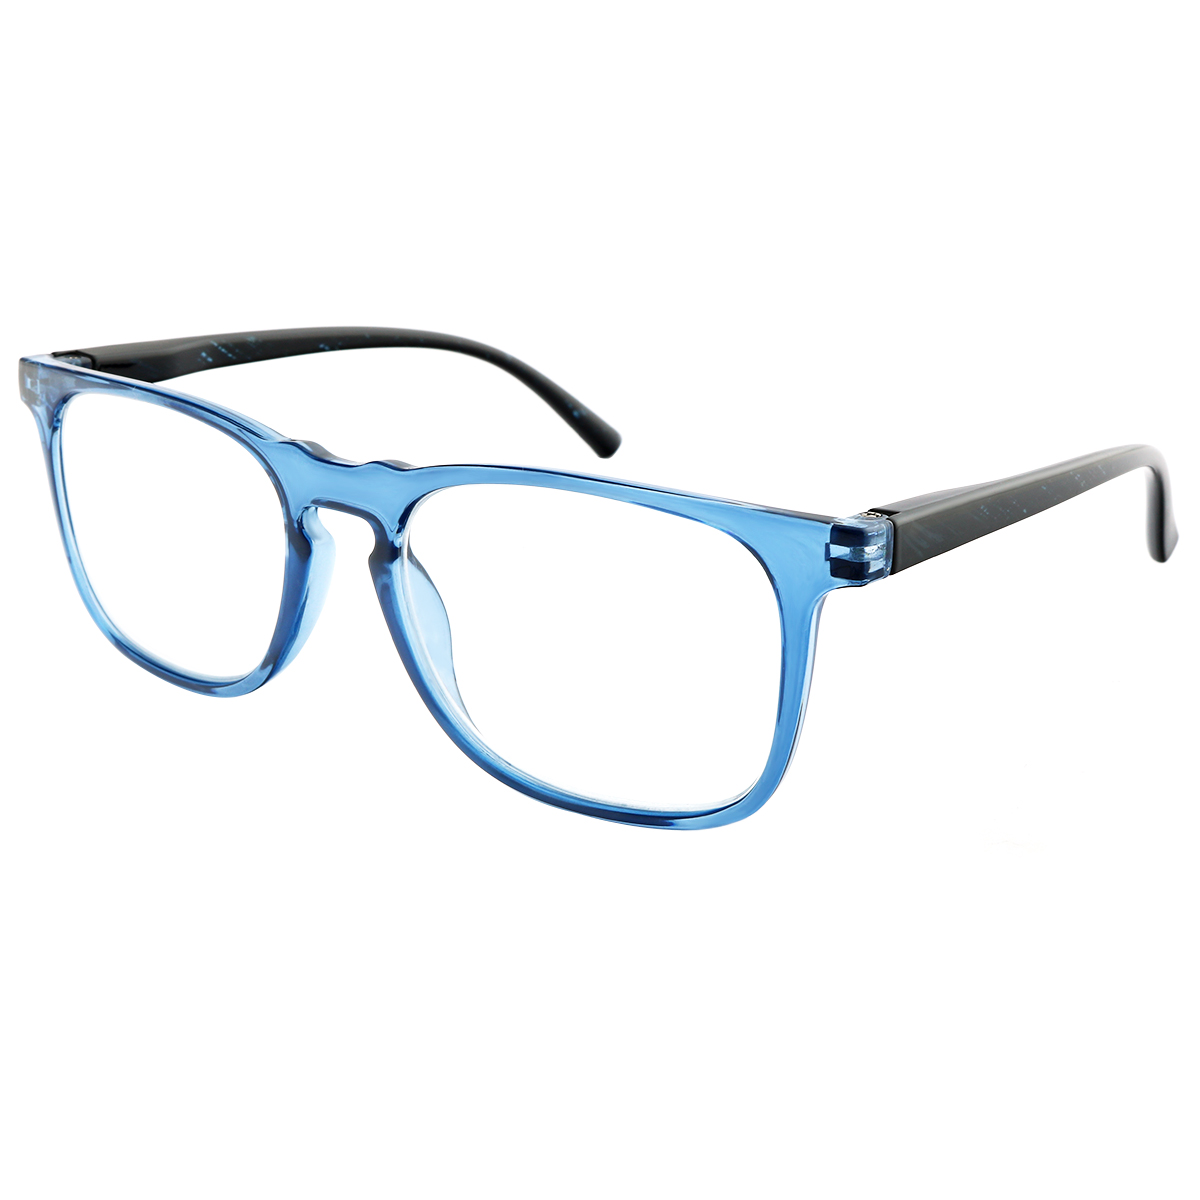 Eclipse - Square Blue Reading Glasses for Men & Women - EFE